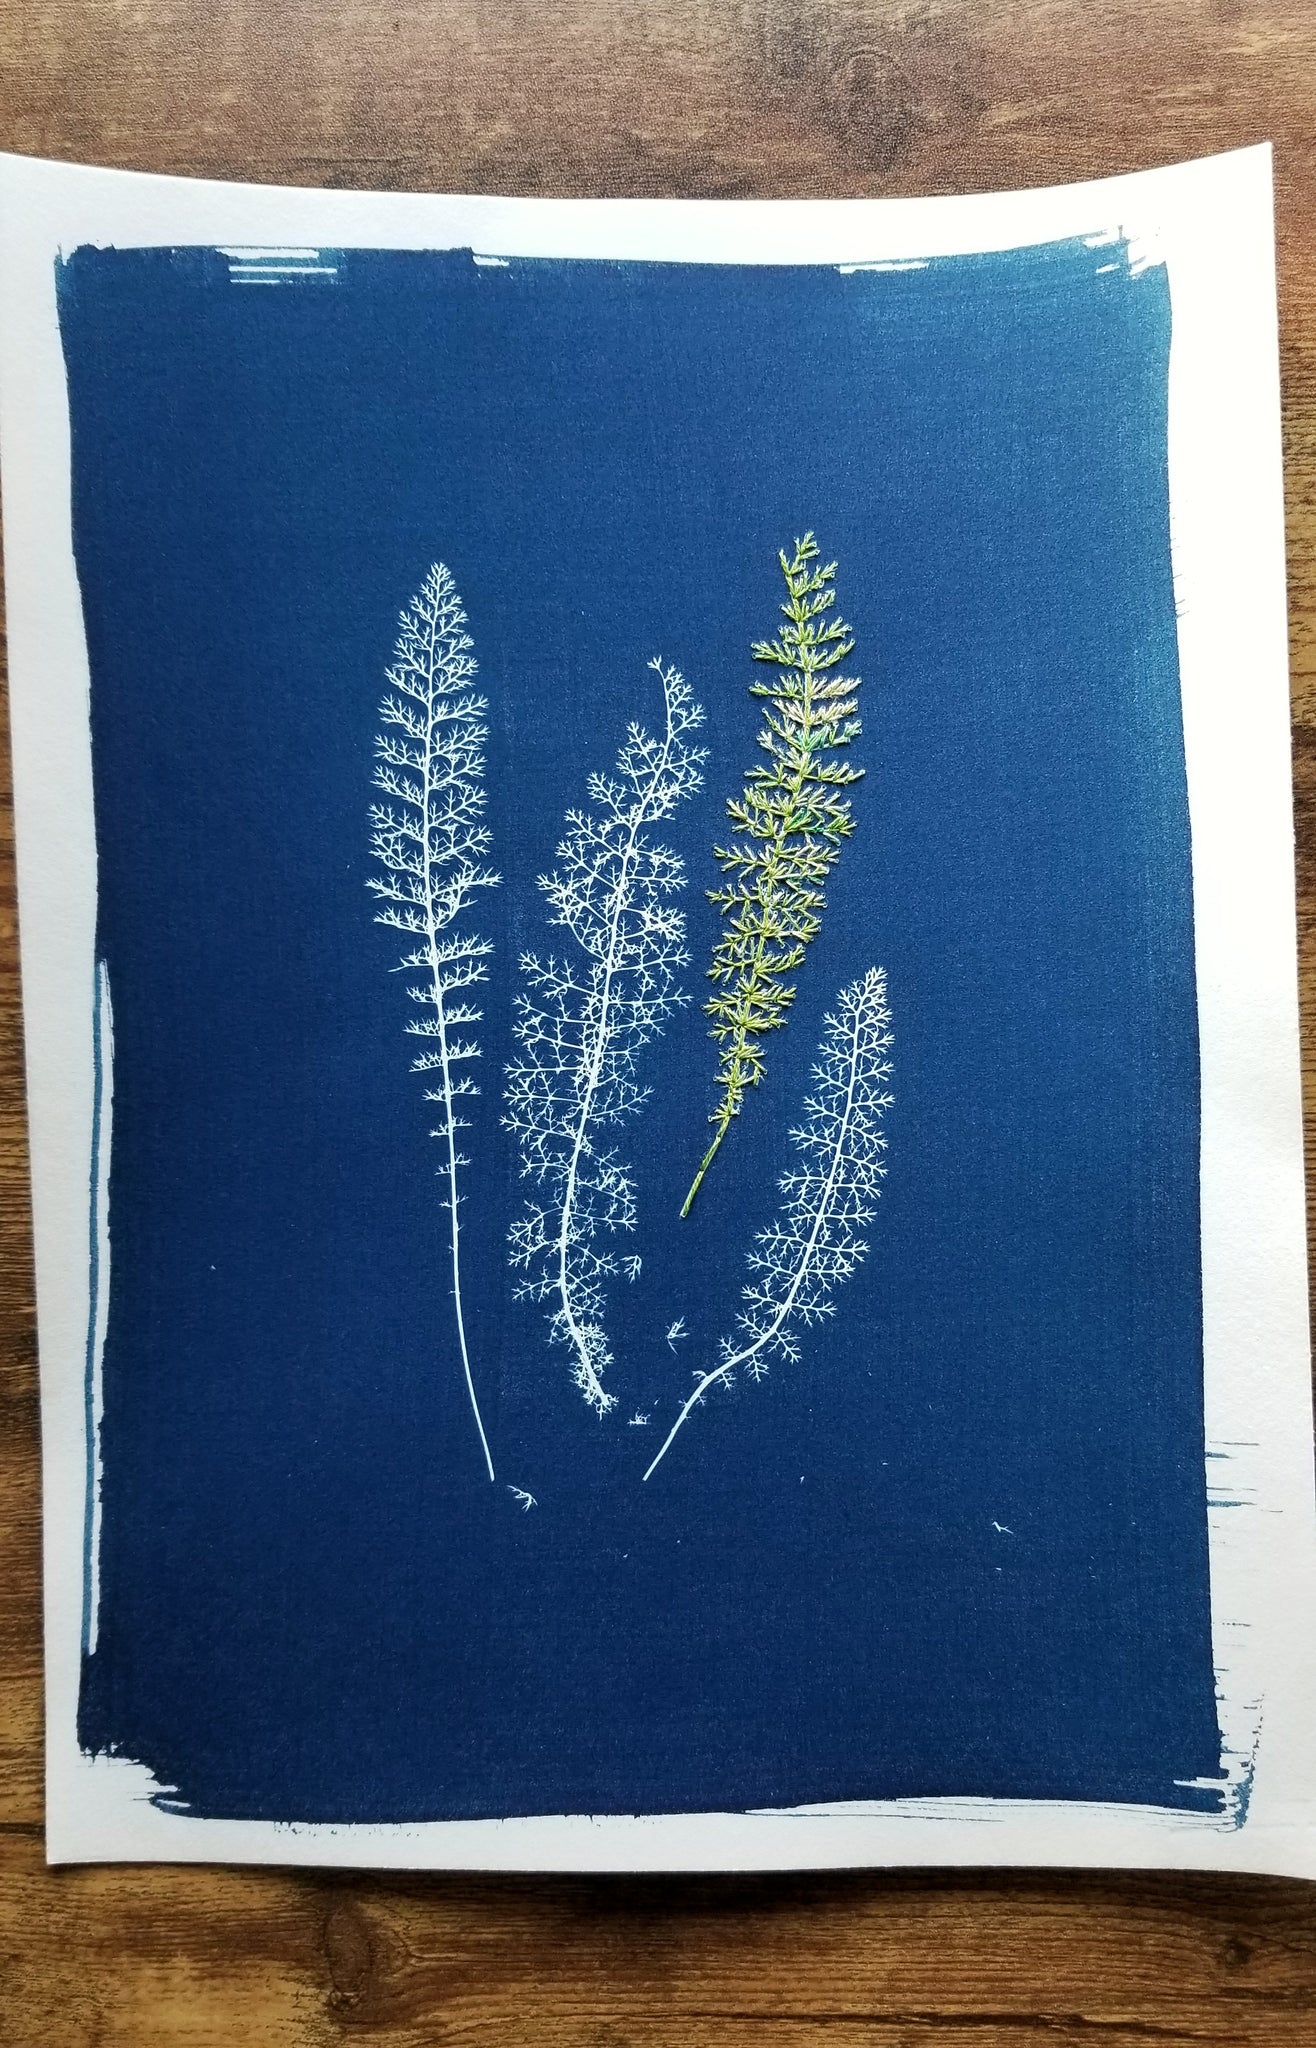 Stitched cyanotype study II